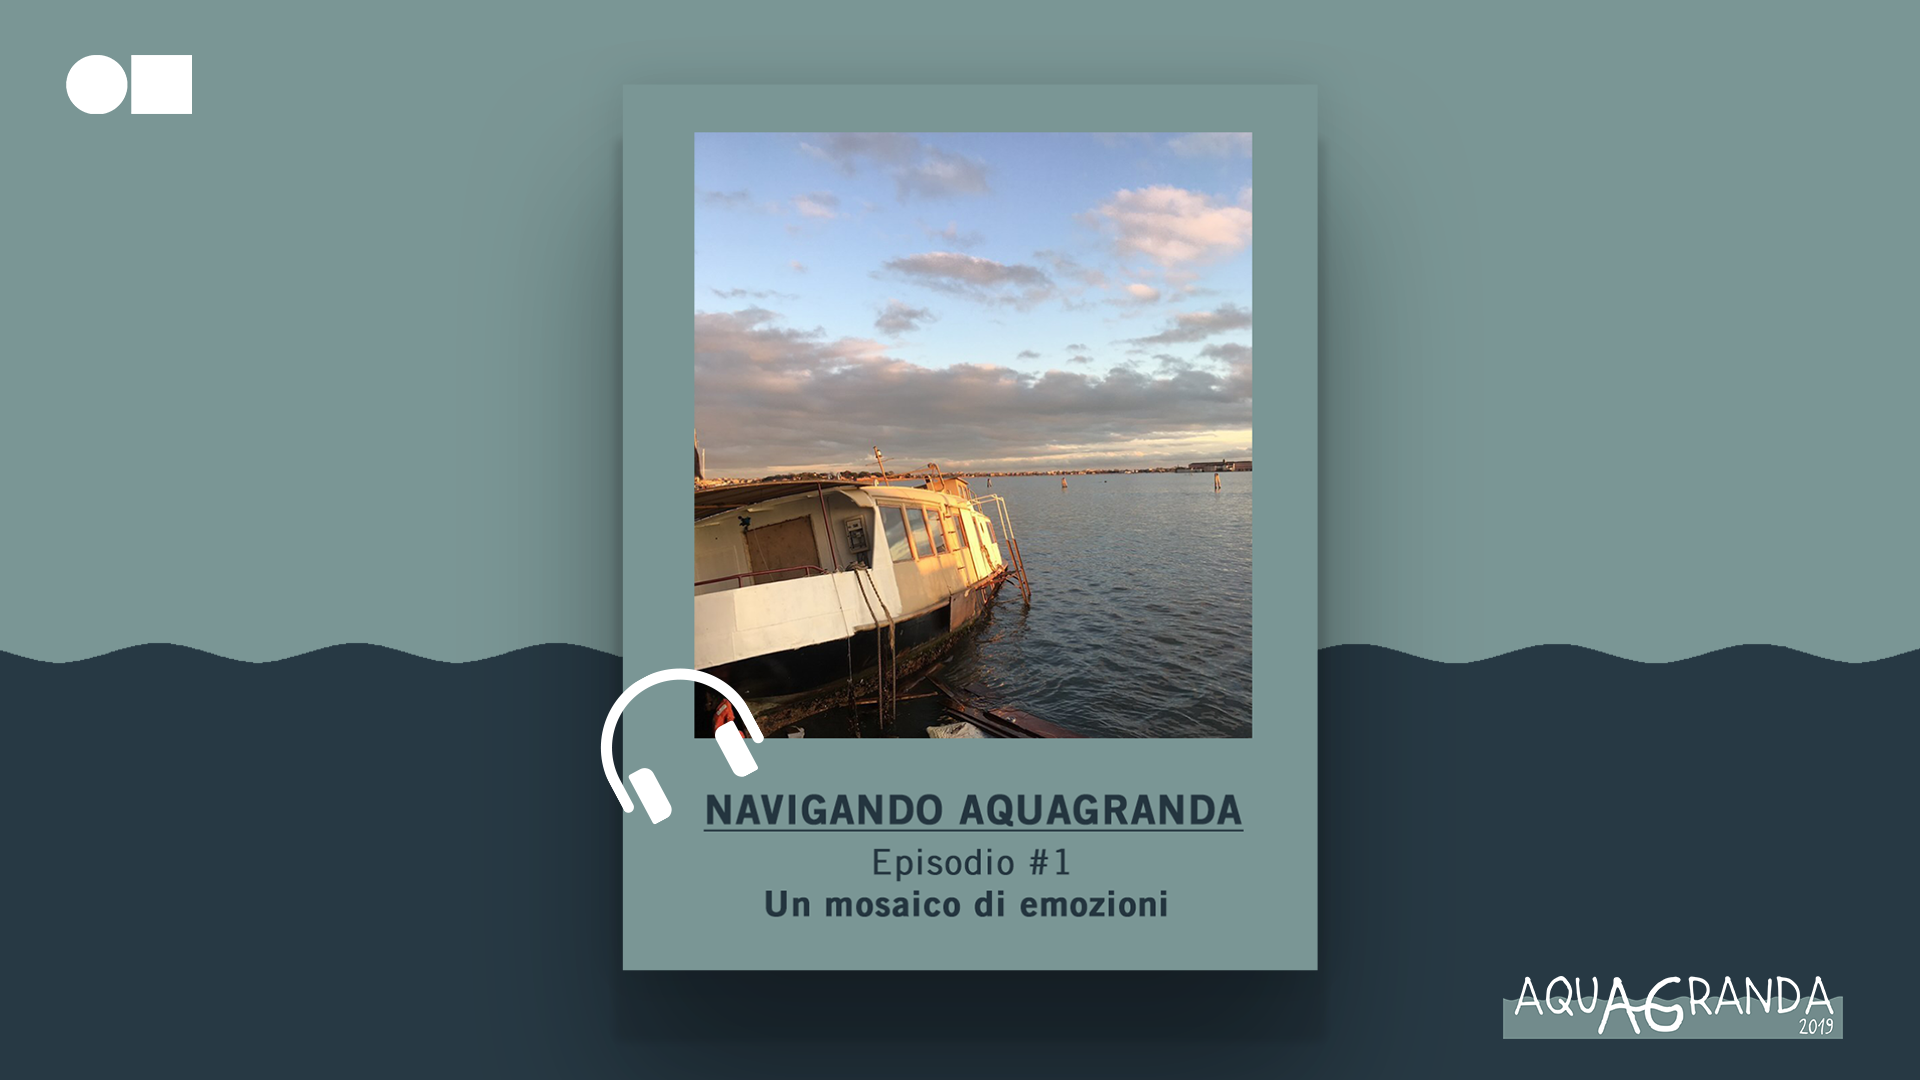 Navigando AquaGranda - A mosaic of emotions